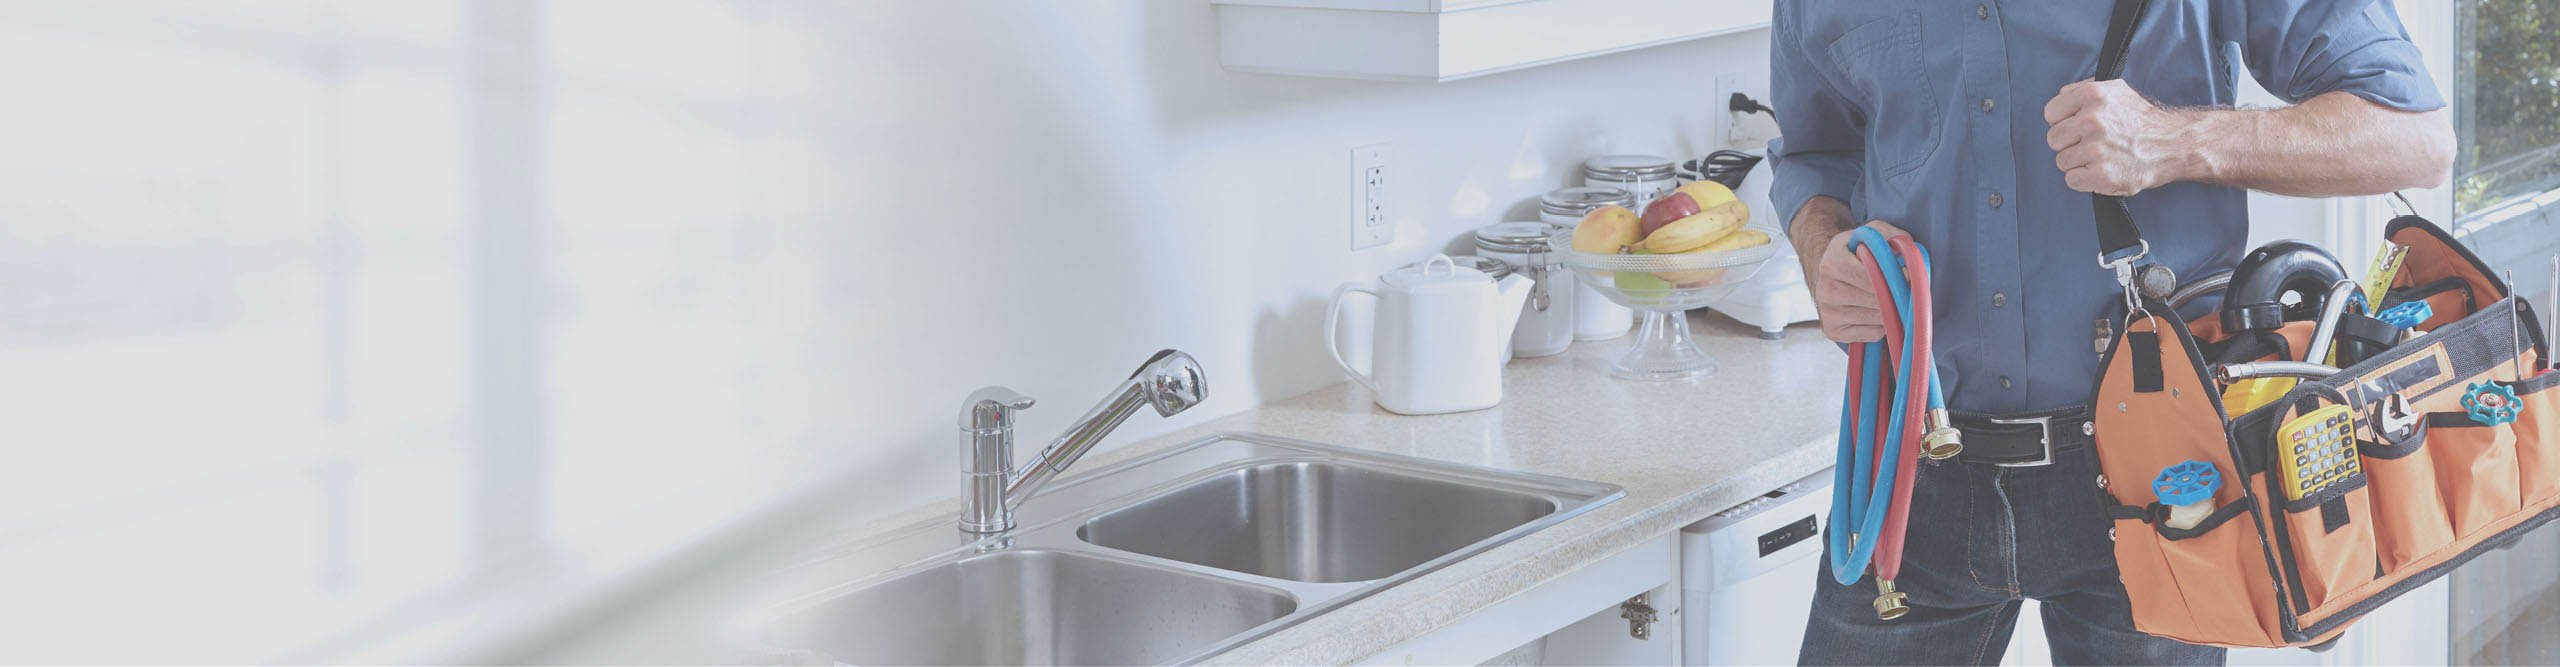 Prodotti per installatori - Product for plumbers - Waterfitters